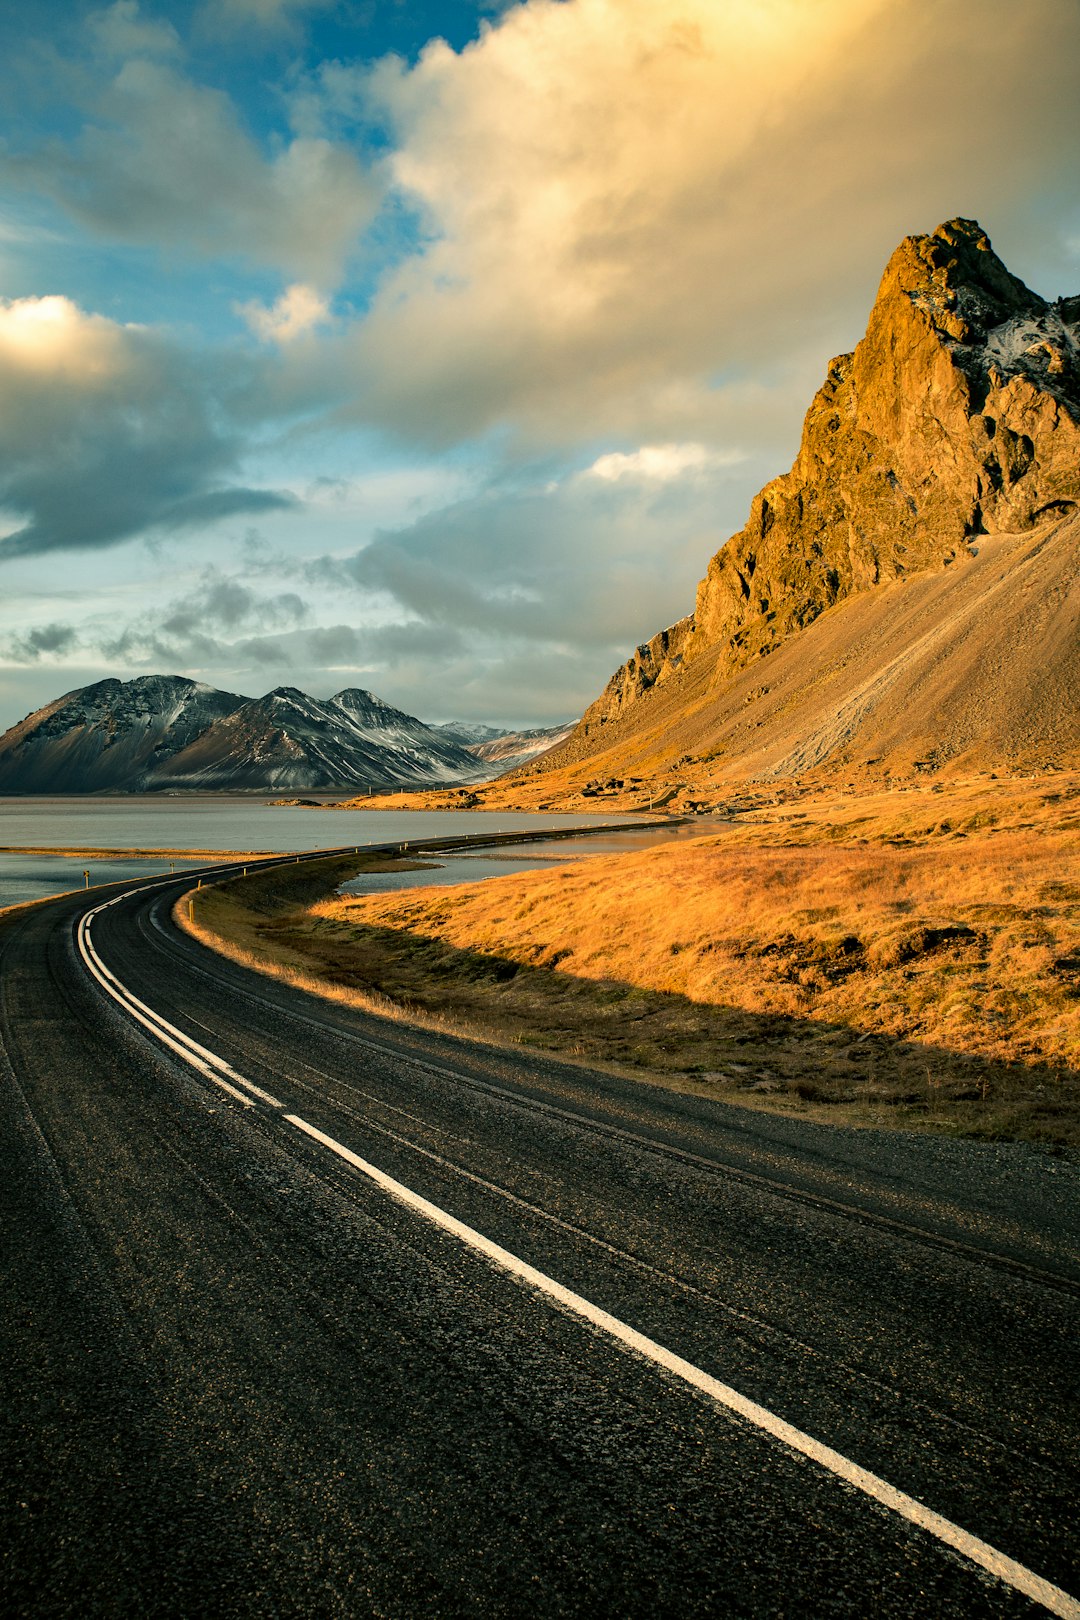 Travel Tips and Stories of Þjóðvegur in Iceland